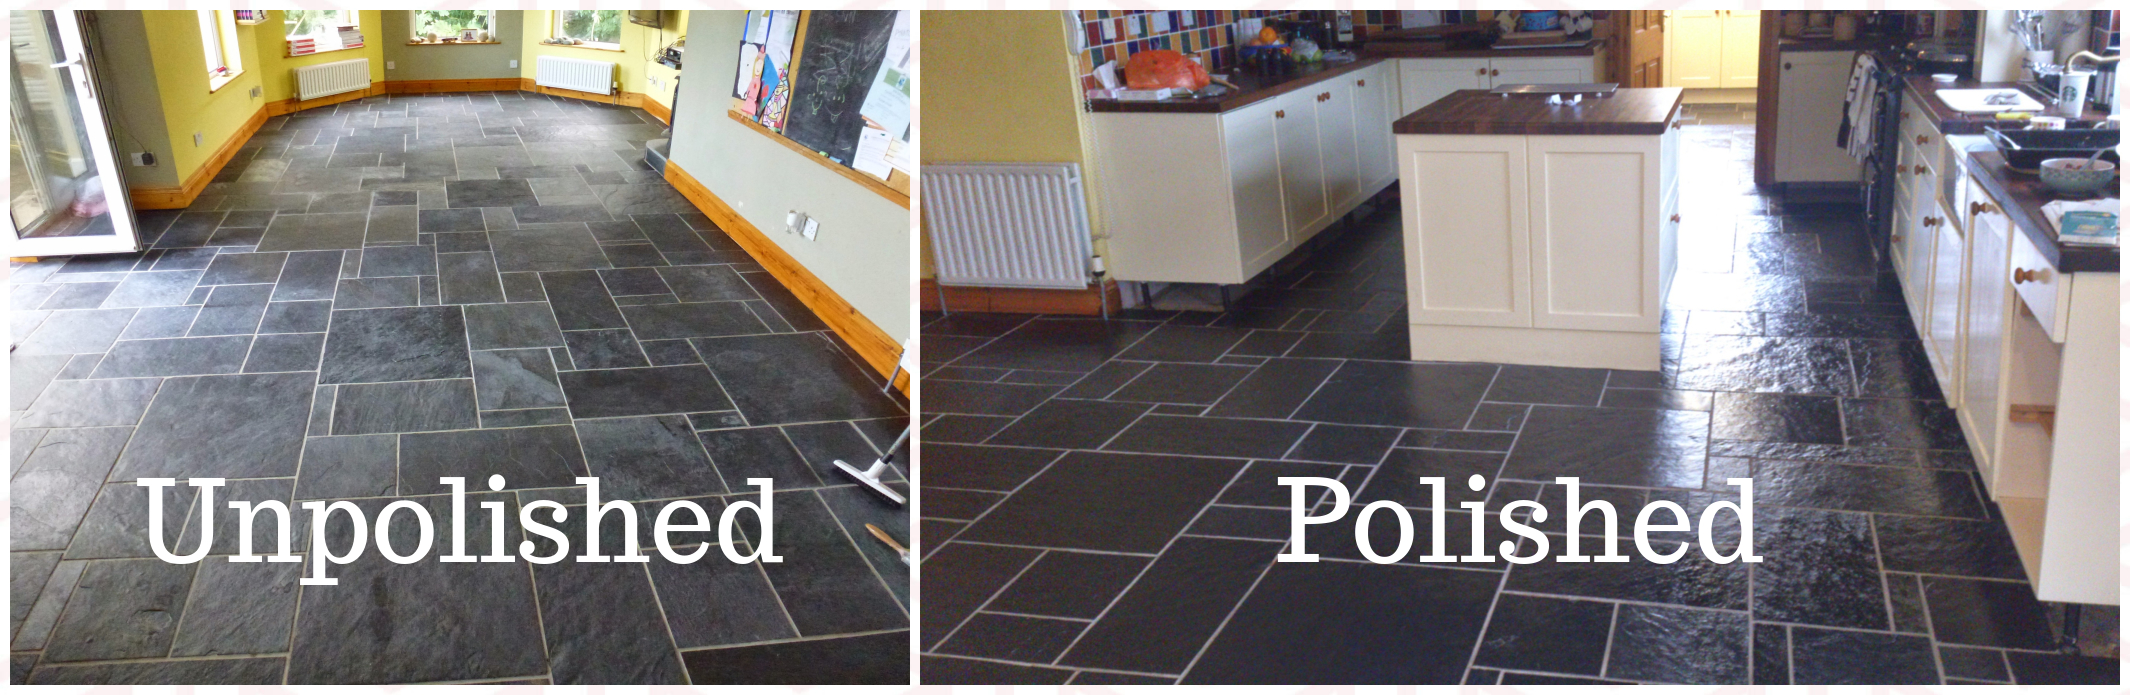 Polished stone floor